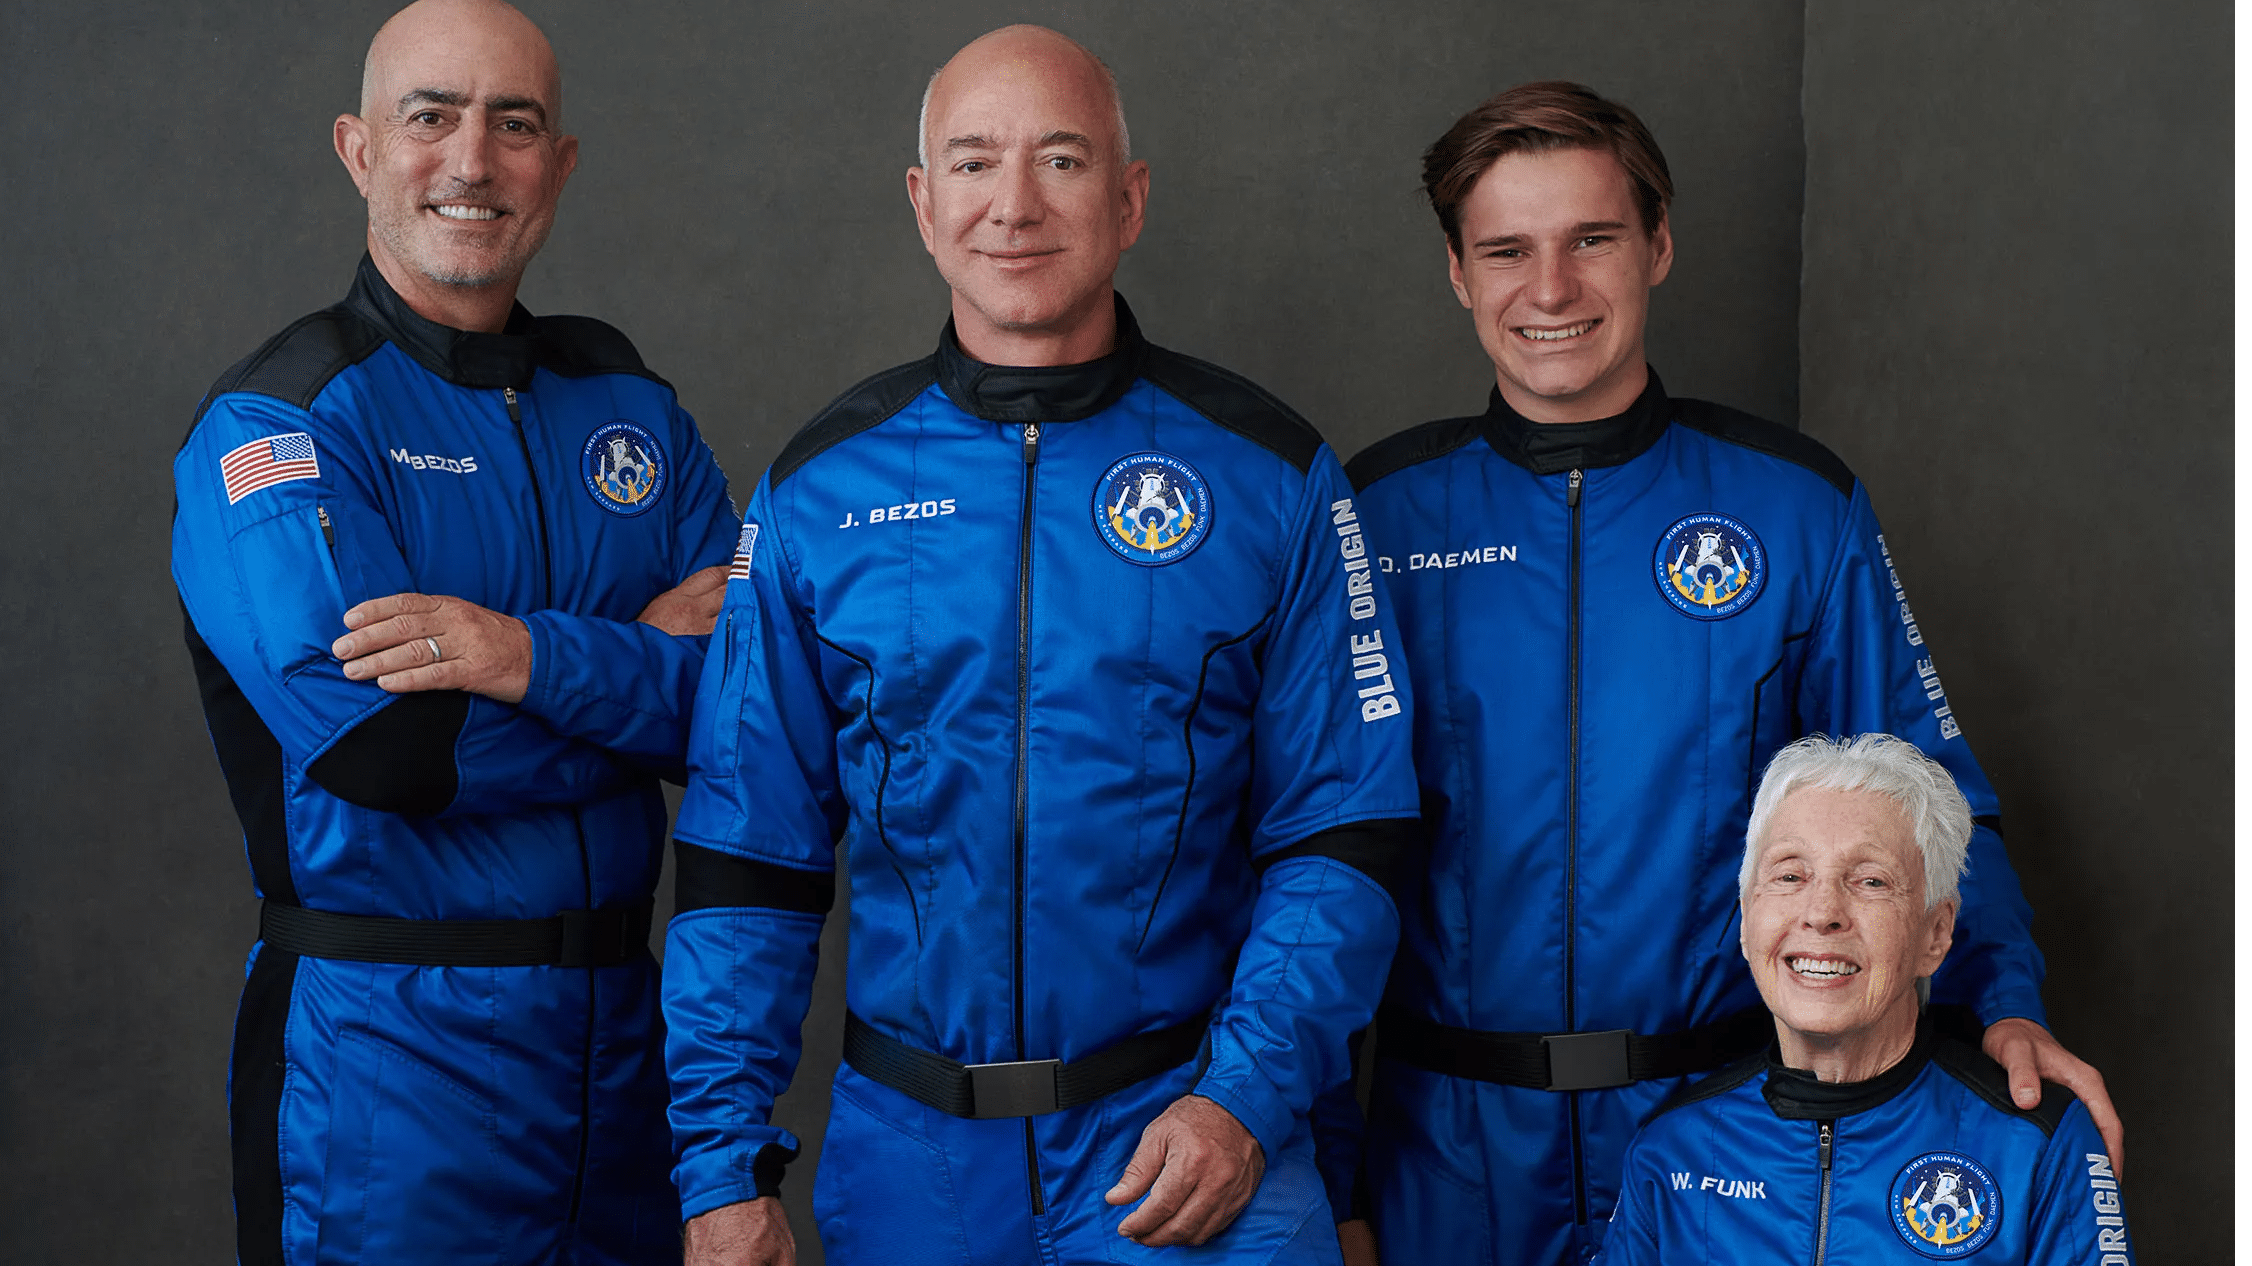 Historic moment in spaceflight history: Blue Origin on Jeff Bezos’ space trip